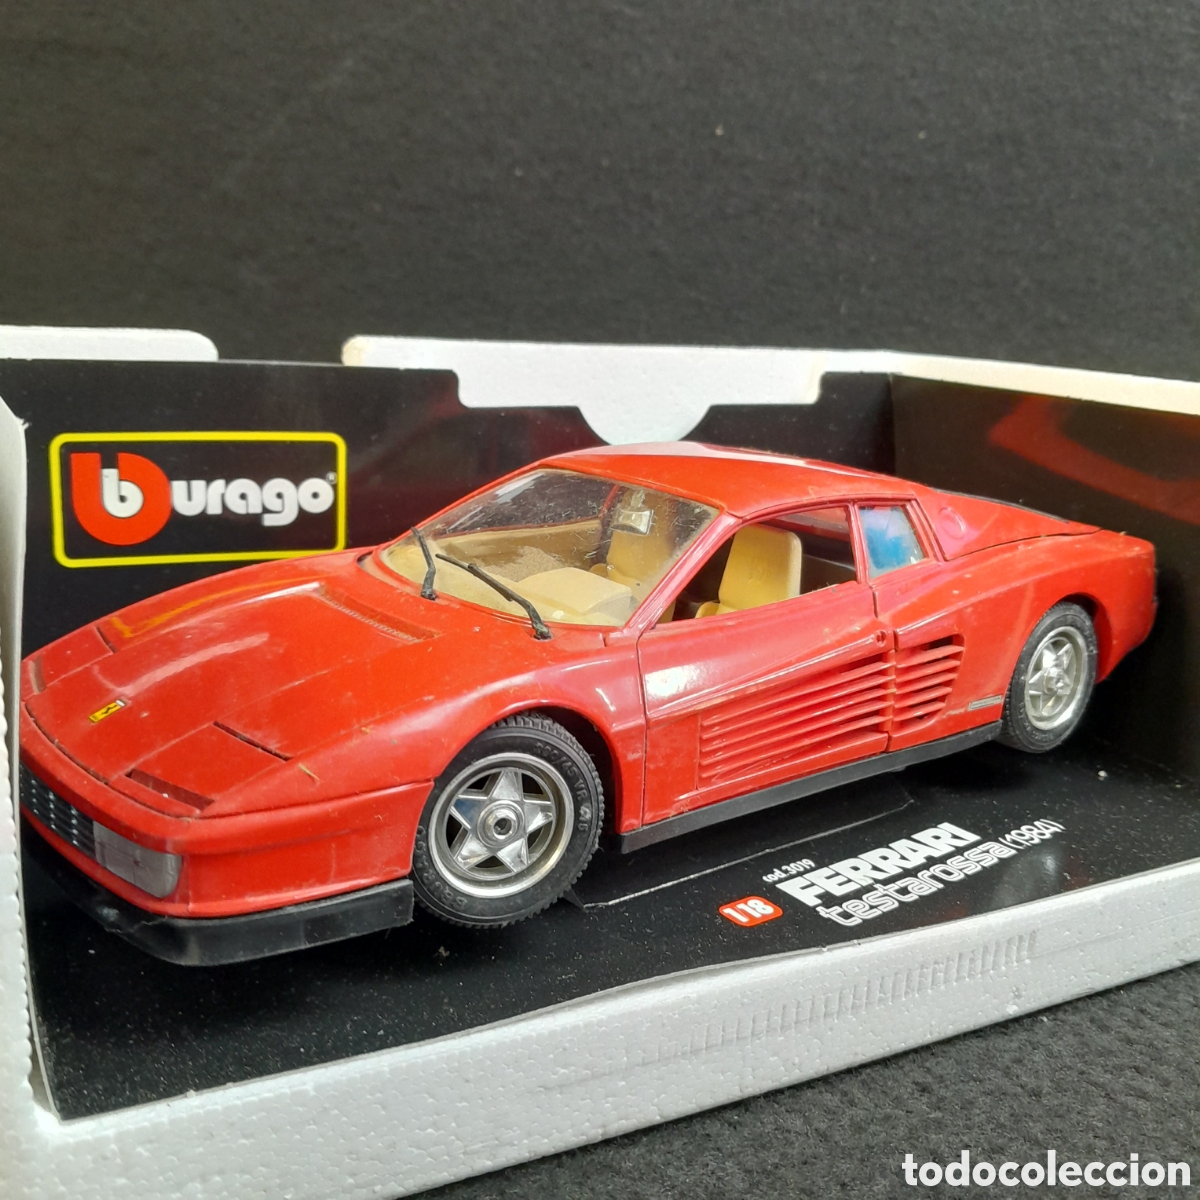 Voiture Burago - Ferrari Testa Rossa (1984)